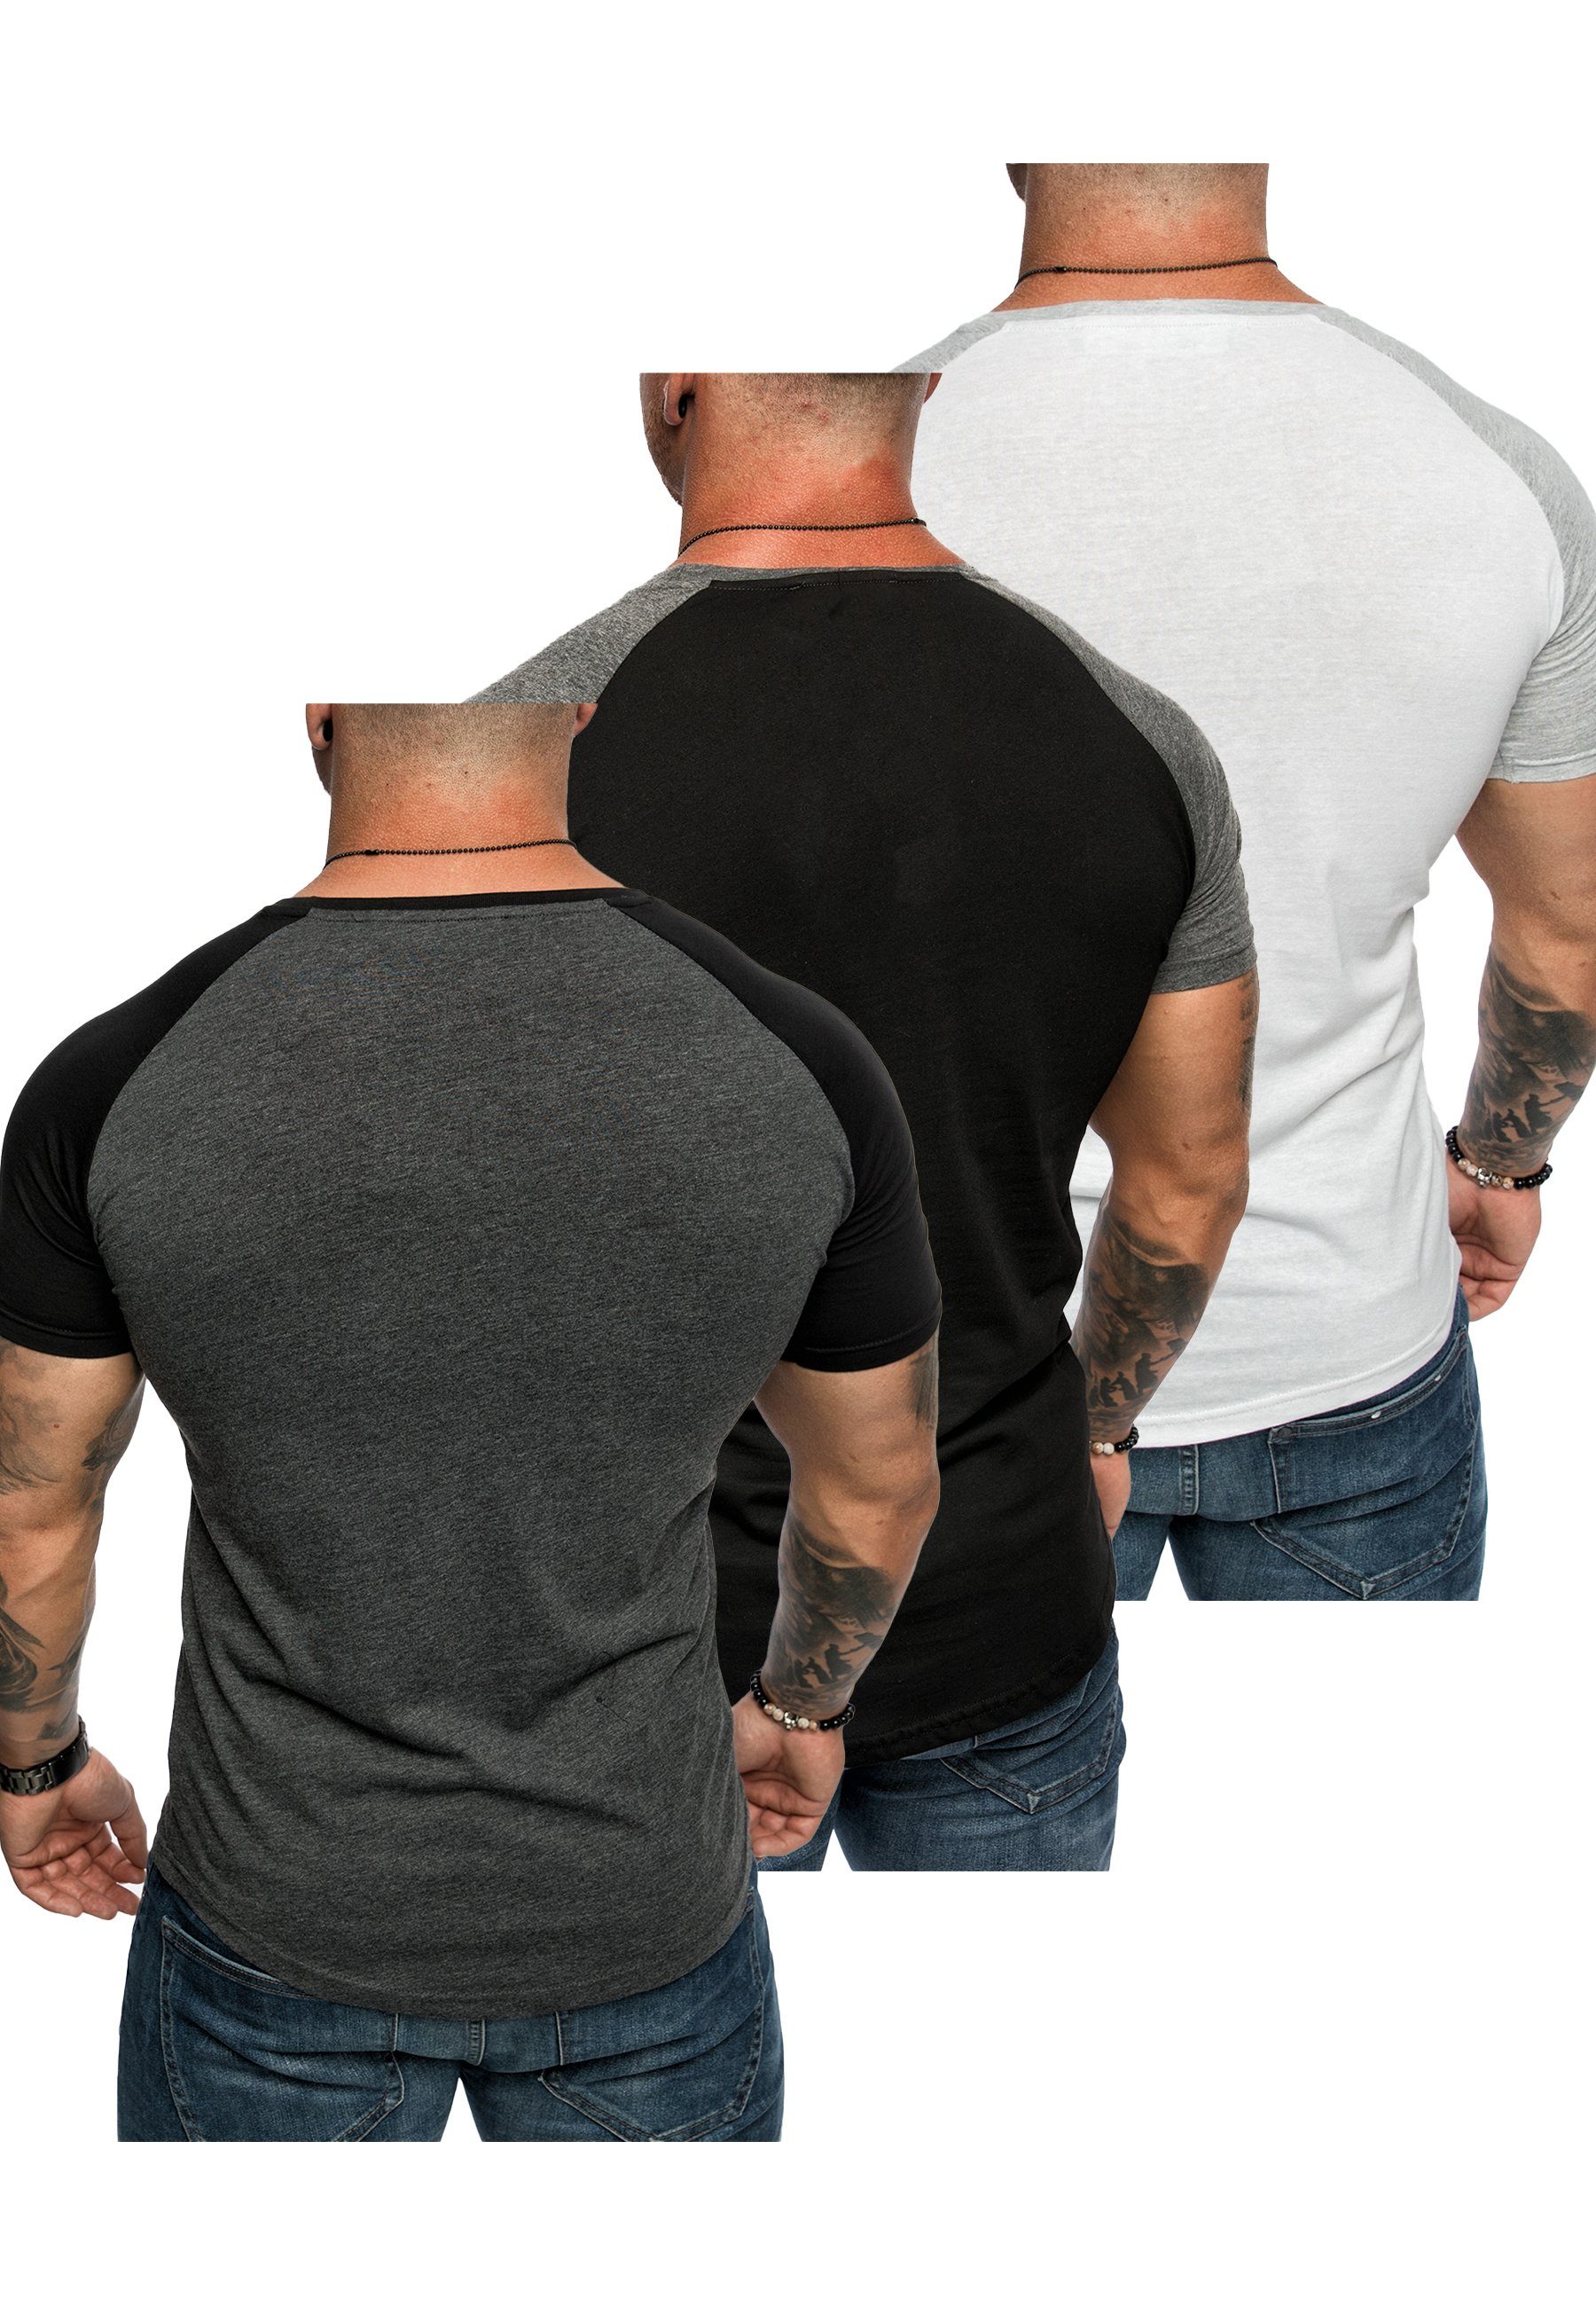 T-Shirt Herren 3. Kontrast (Weiß/Grau T-Shirts T-Shirt Basic + 3er-Pack Oversize Anthrazit/Schwarz Raglan (3er-Pack) + OMAHA Amaci&Sons Schwarz/Anthrazit)